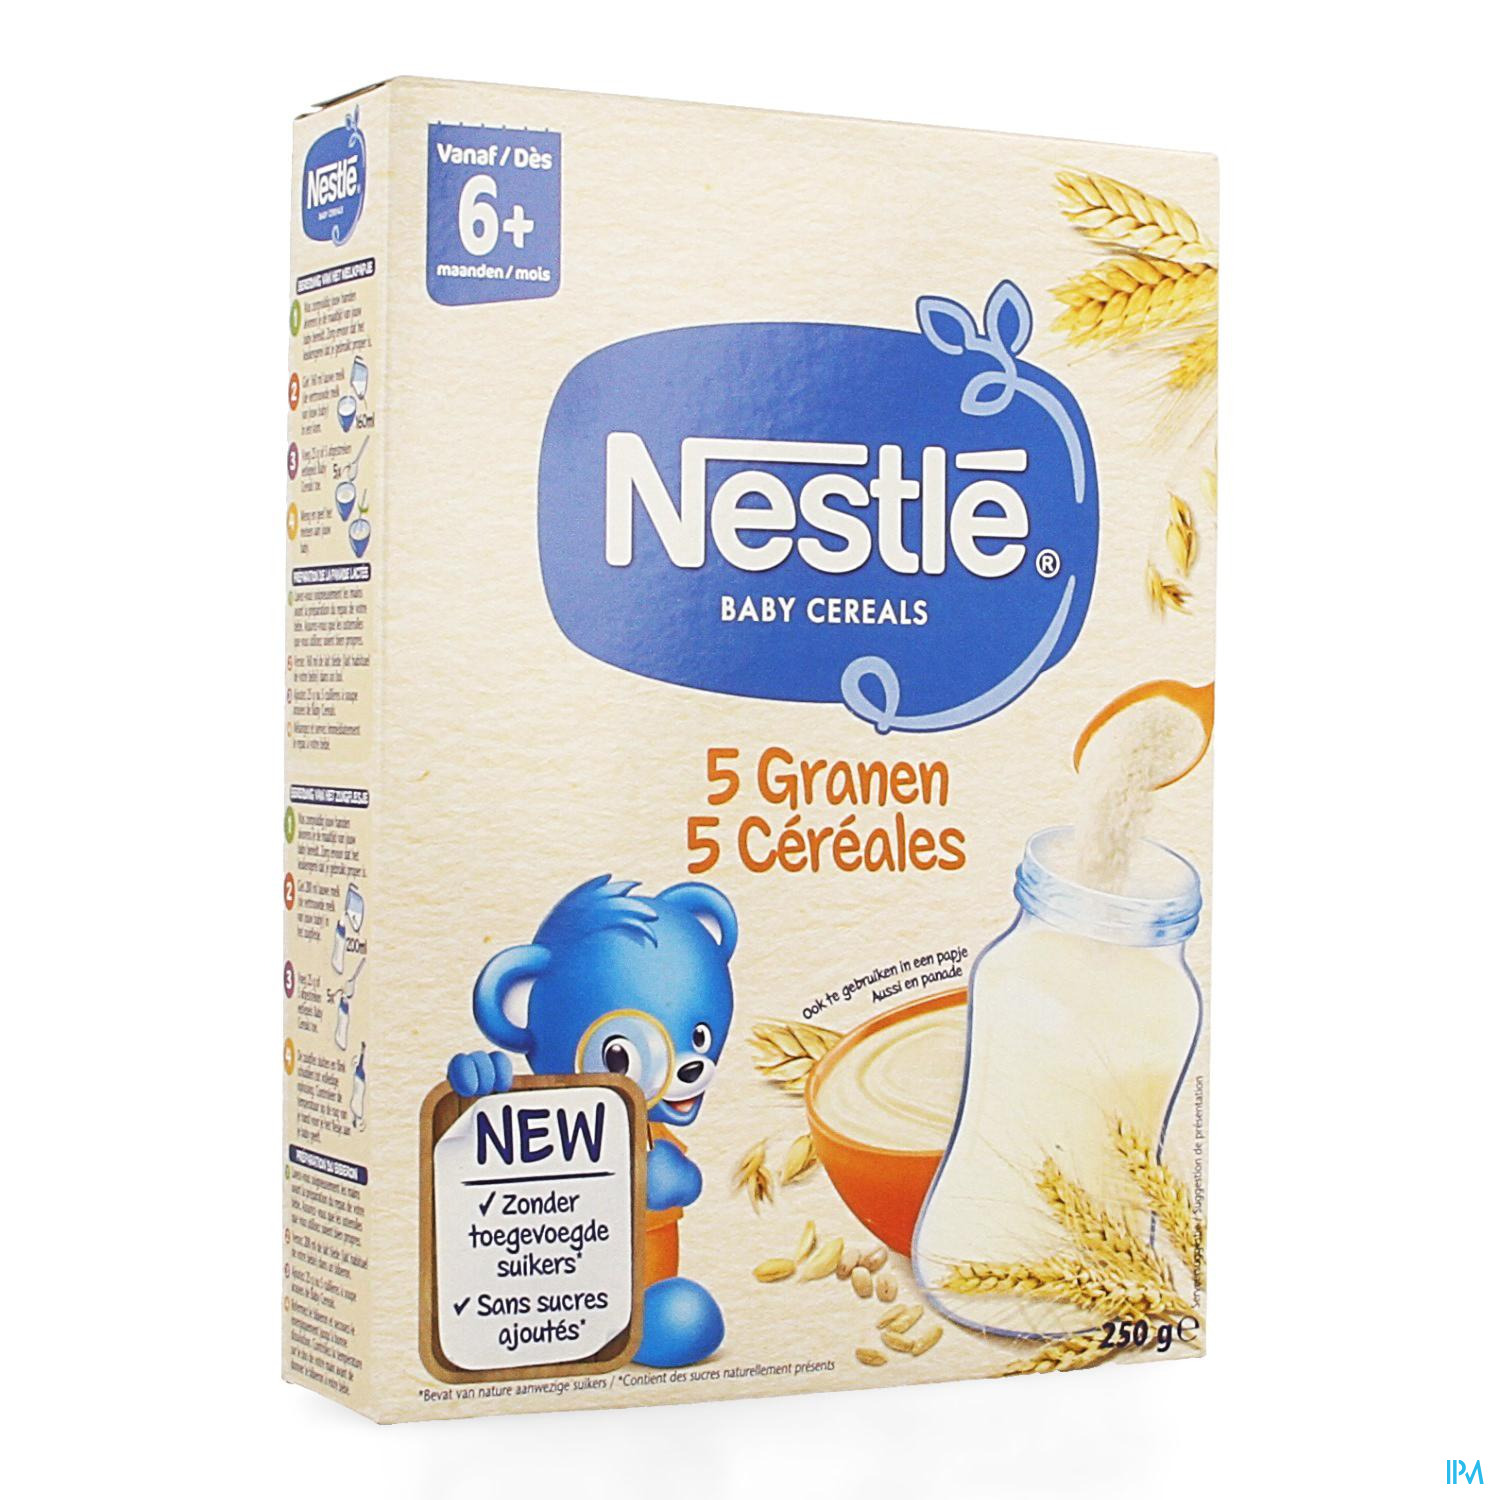 Nestlé Baby - Bébé Nestlé